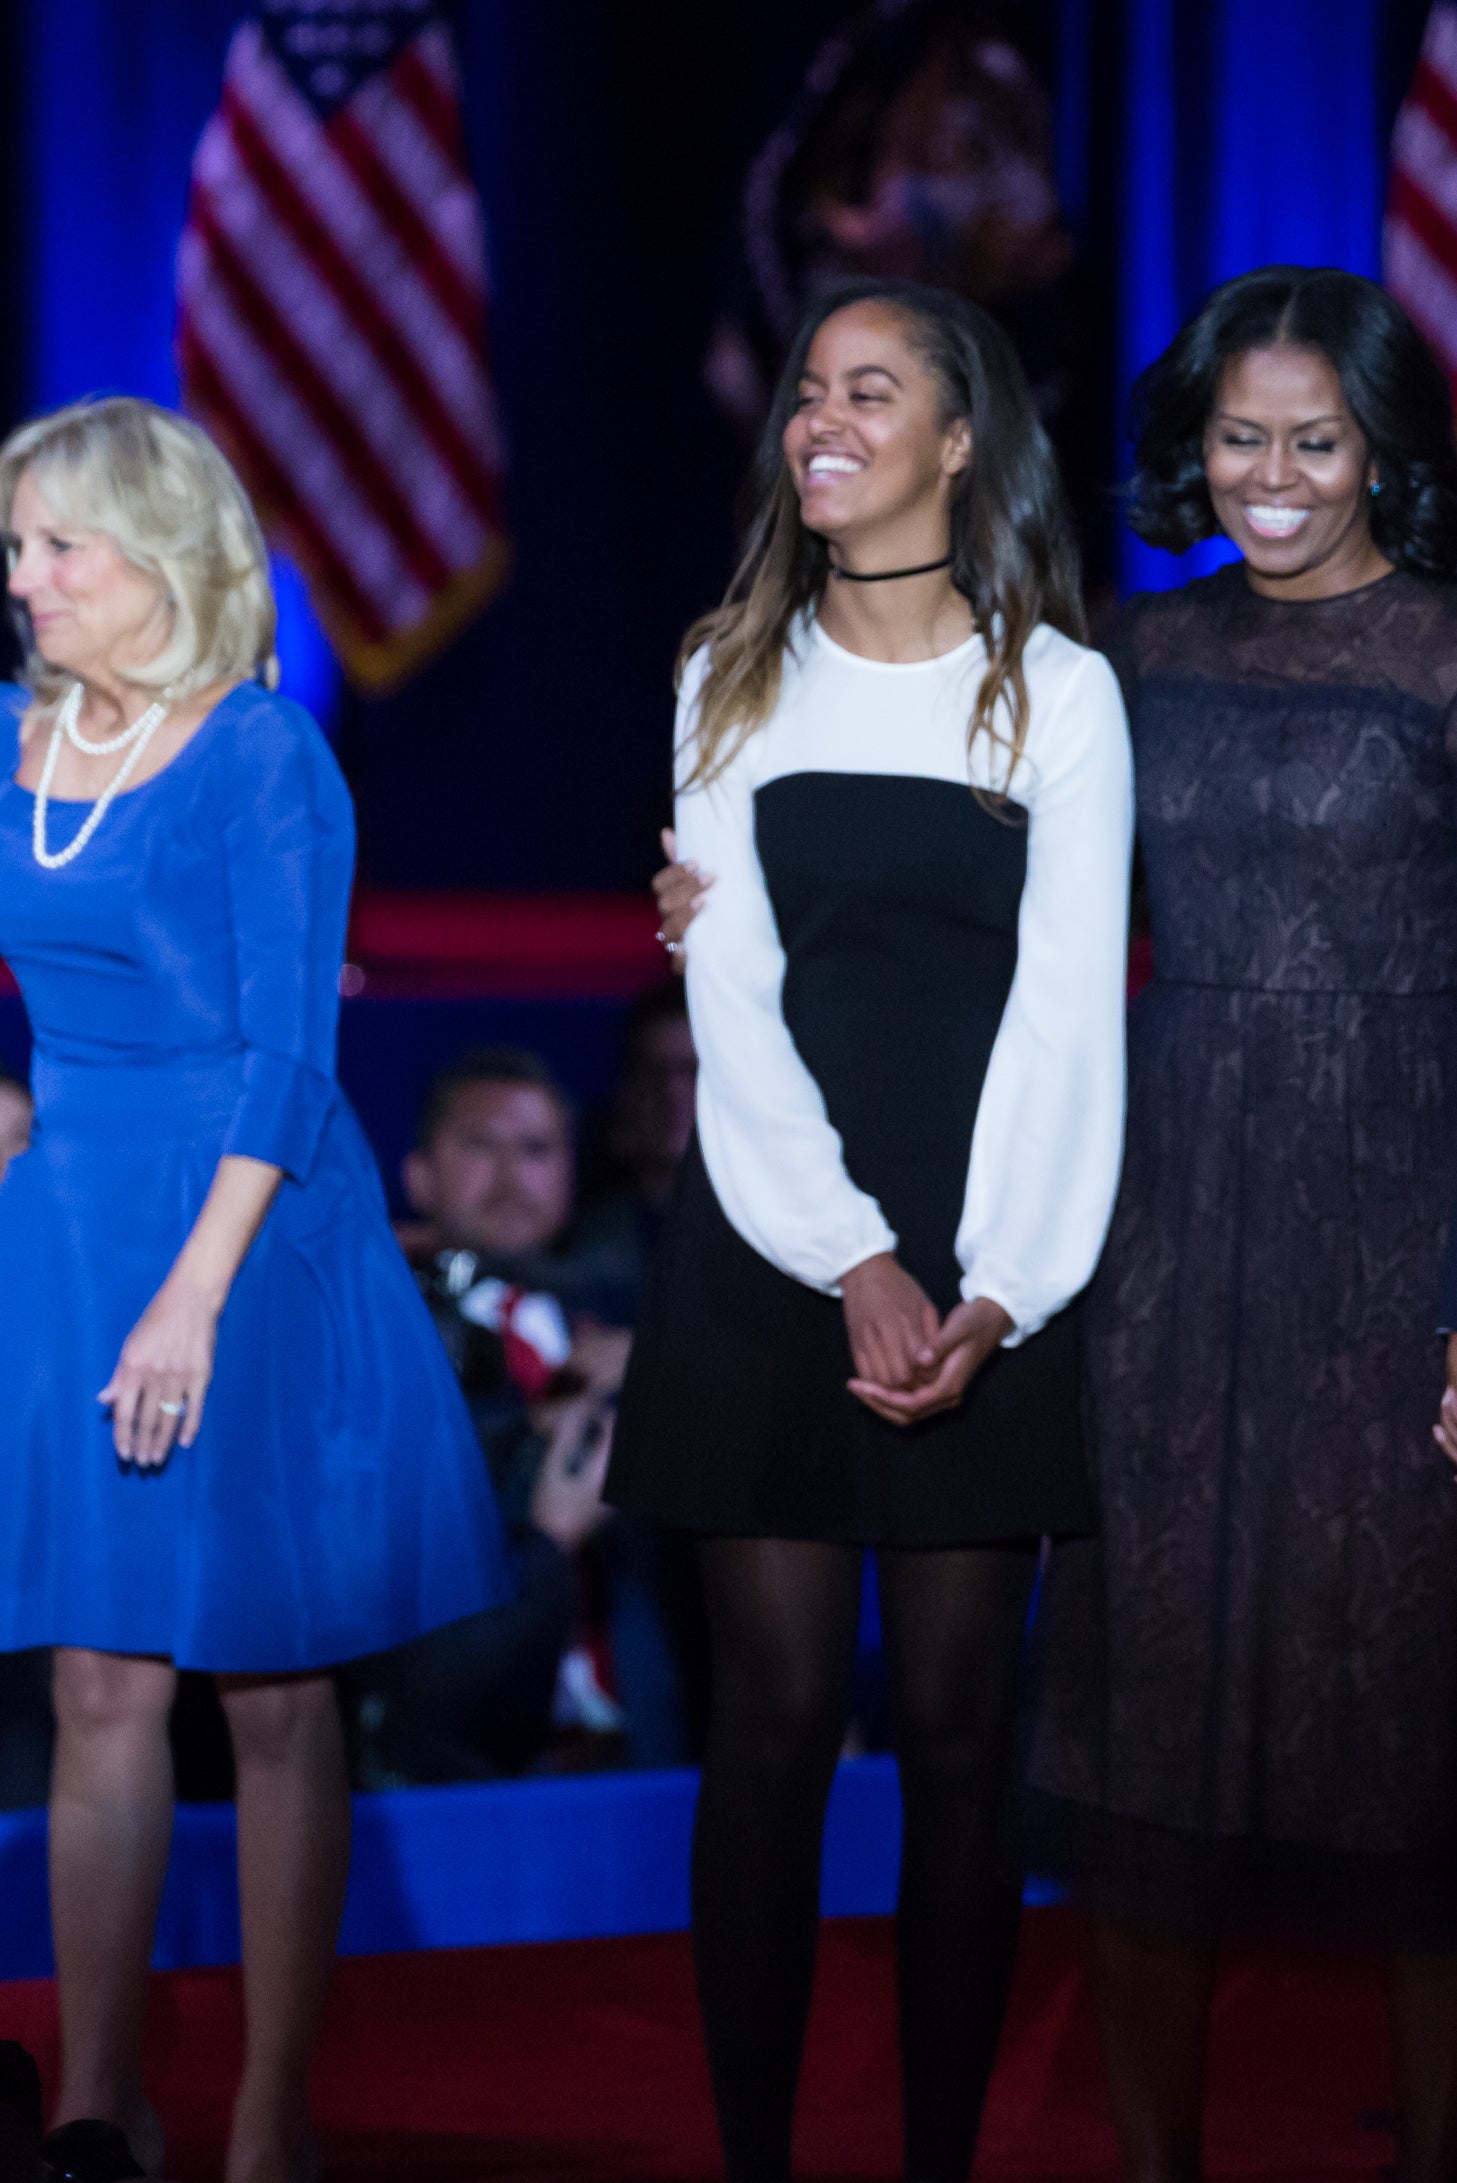 Malia Obama, Michelle Obama, and Barack Obama at an event, smiling